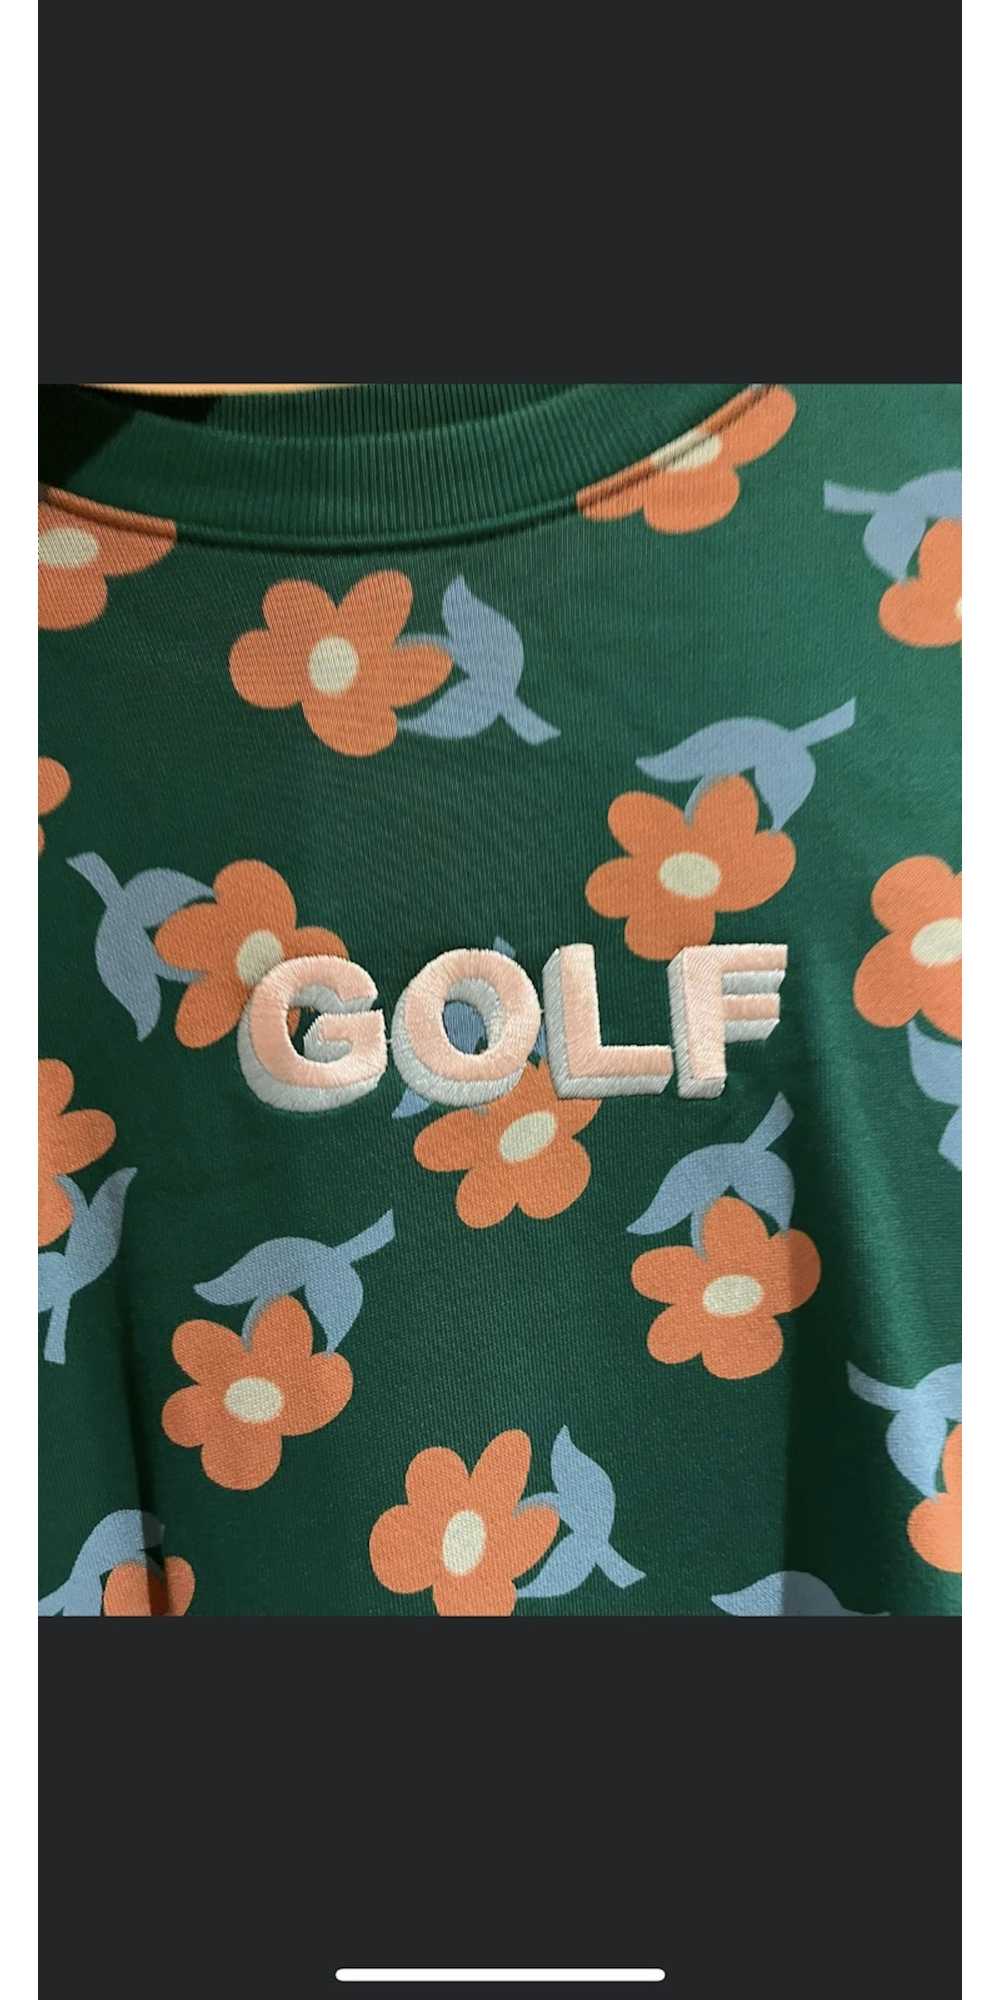 Golf Wang Golf Wang “Find Some Time” Sweatshirt - image 2